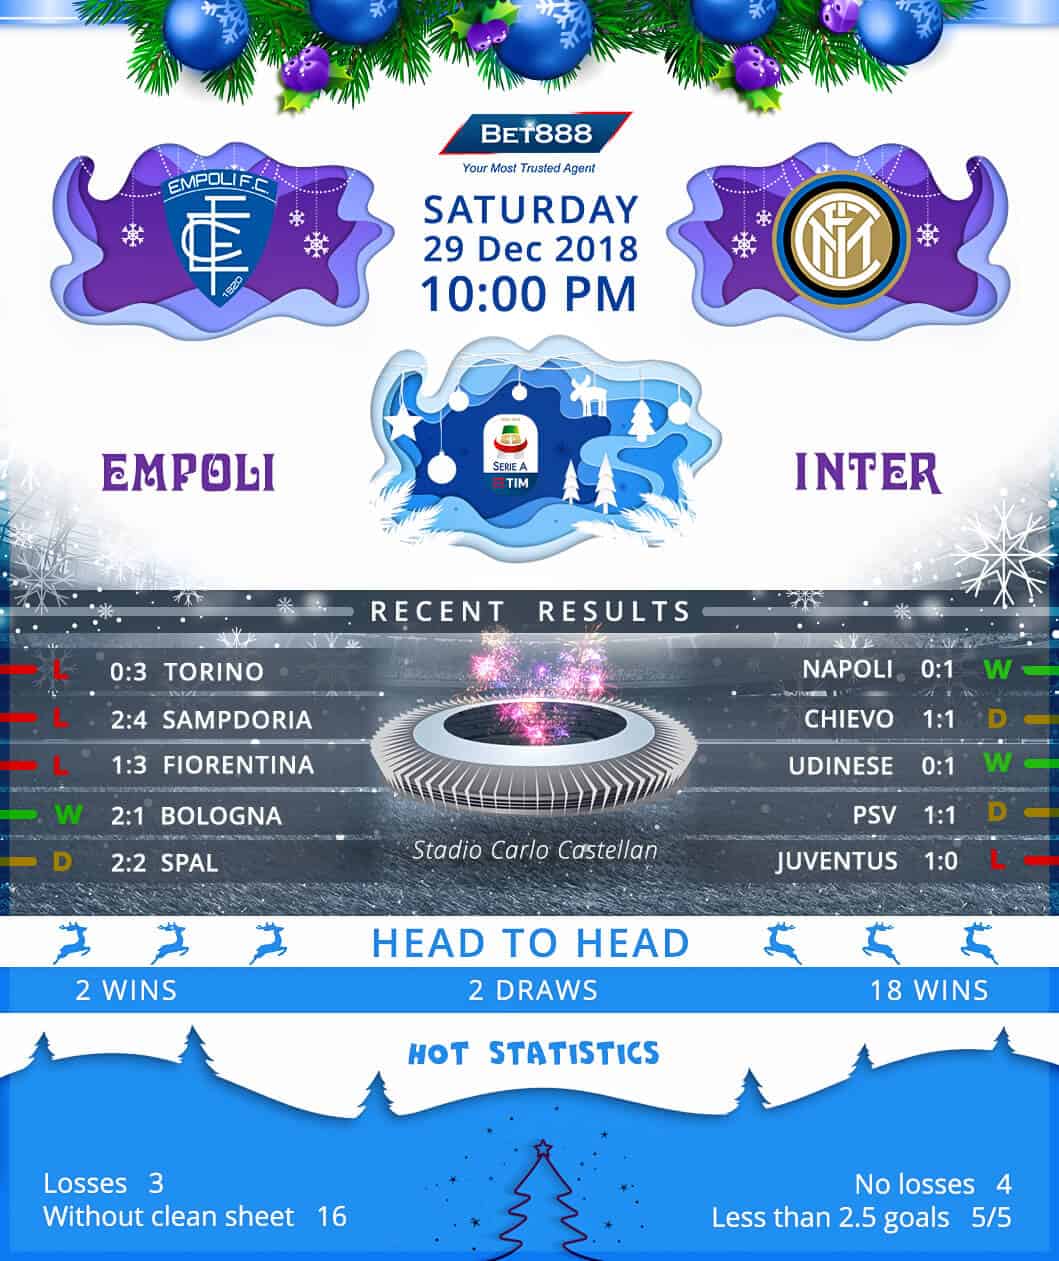 Empoli vs Inter Milan 29/12/18